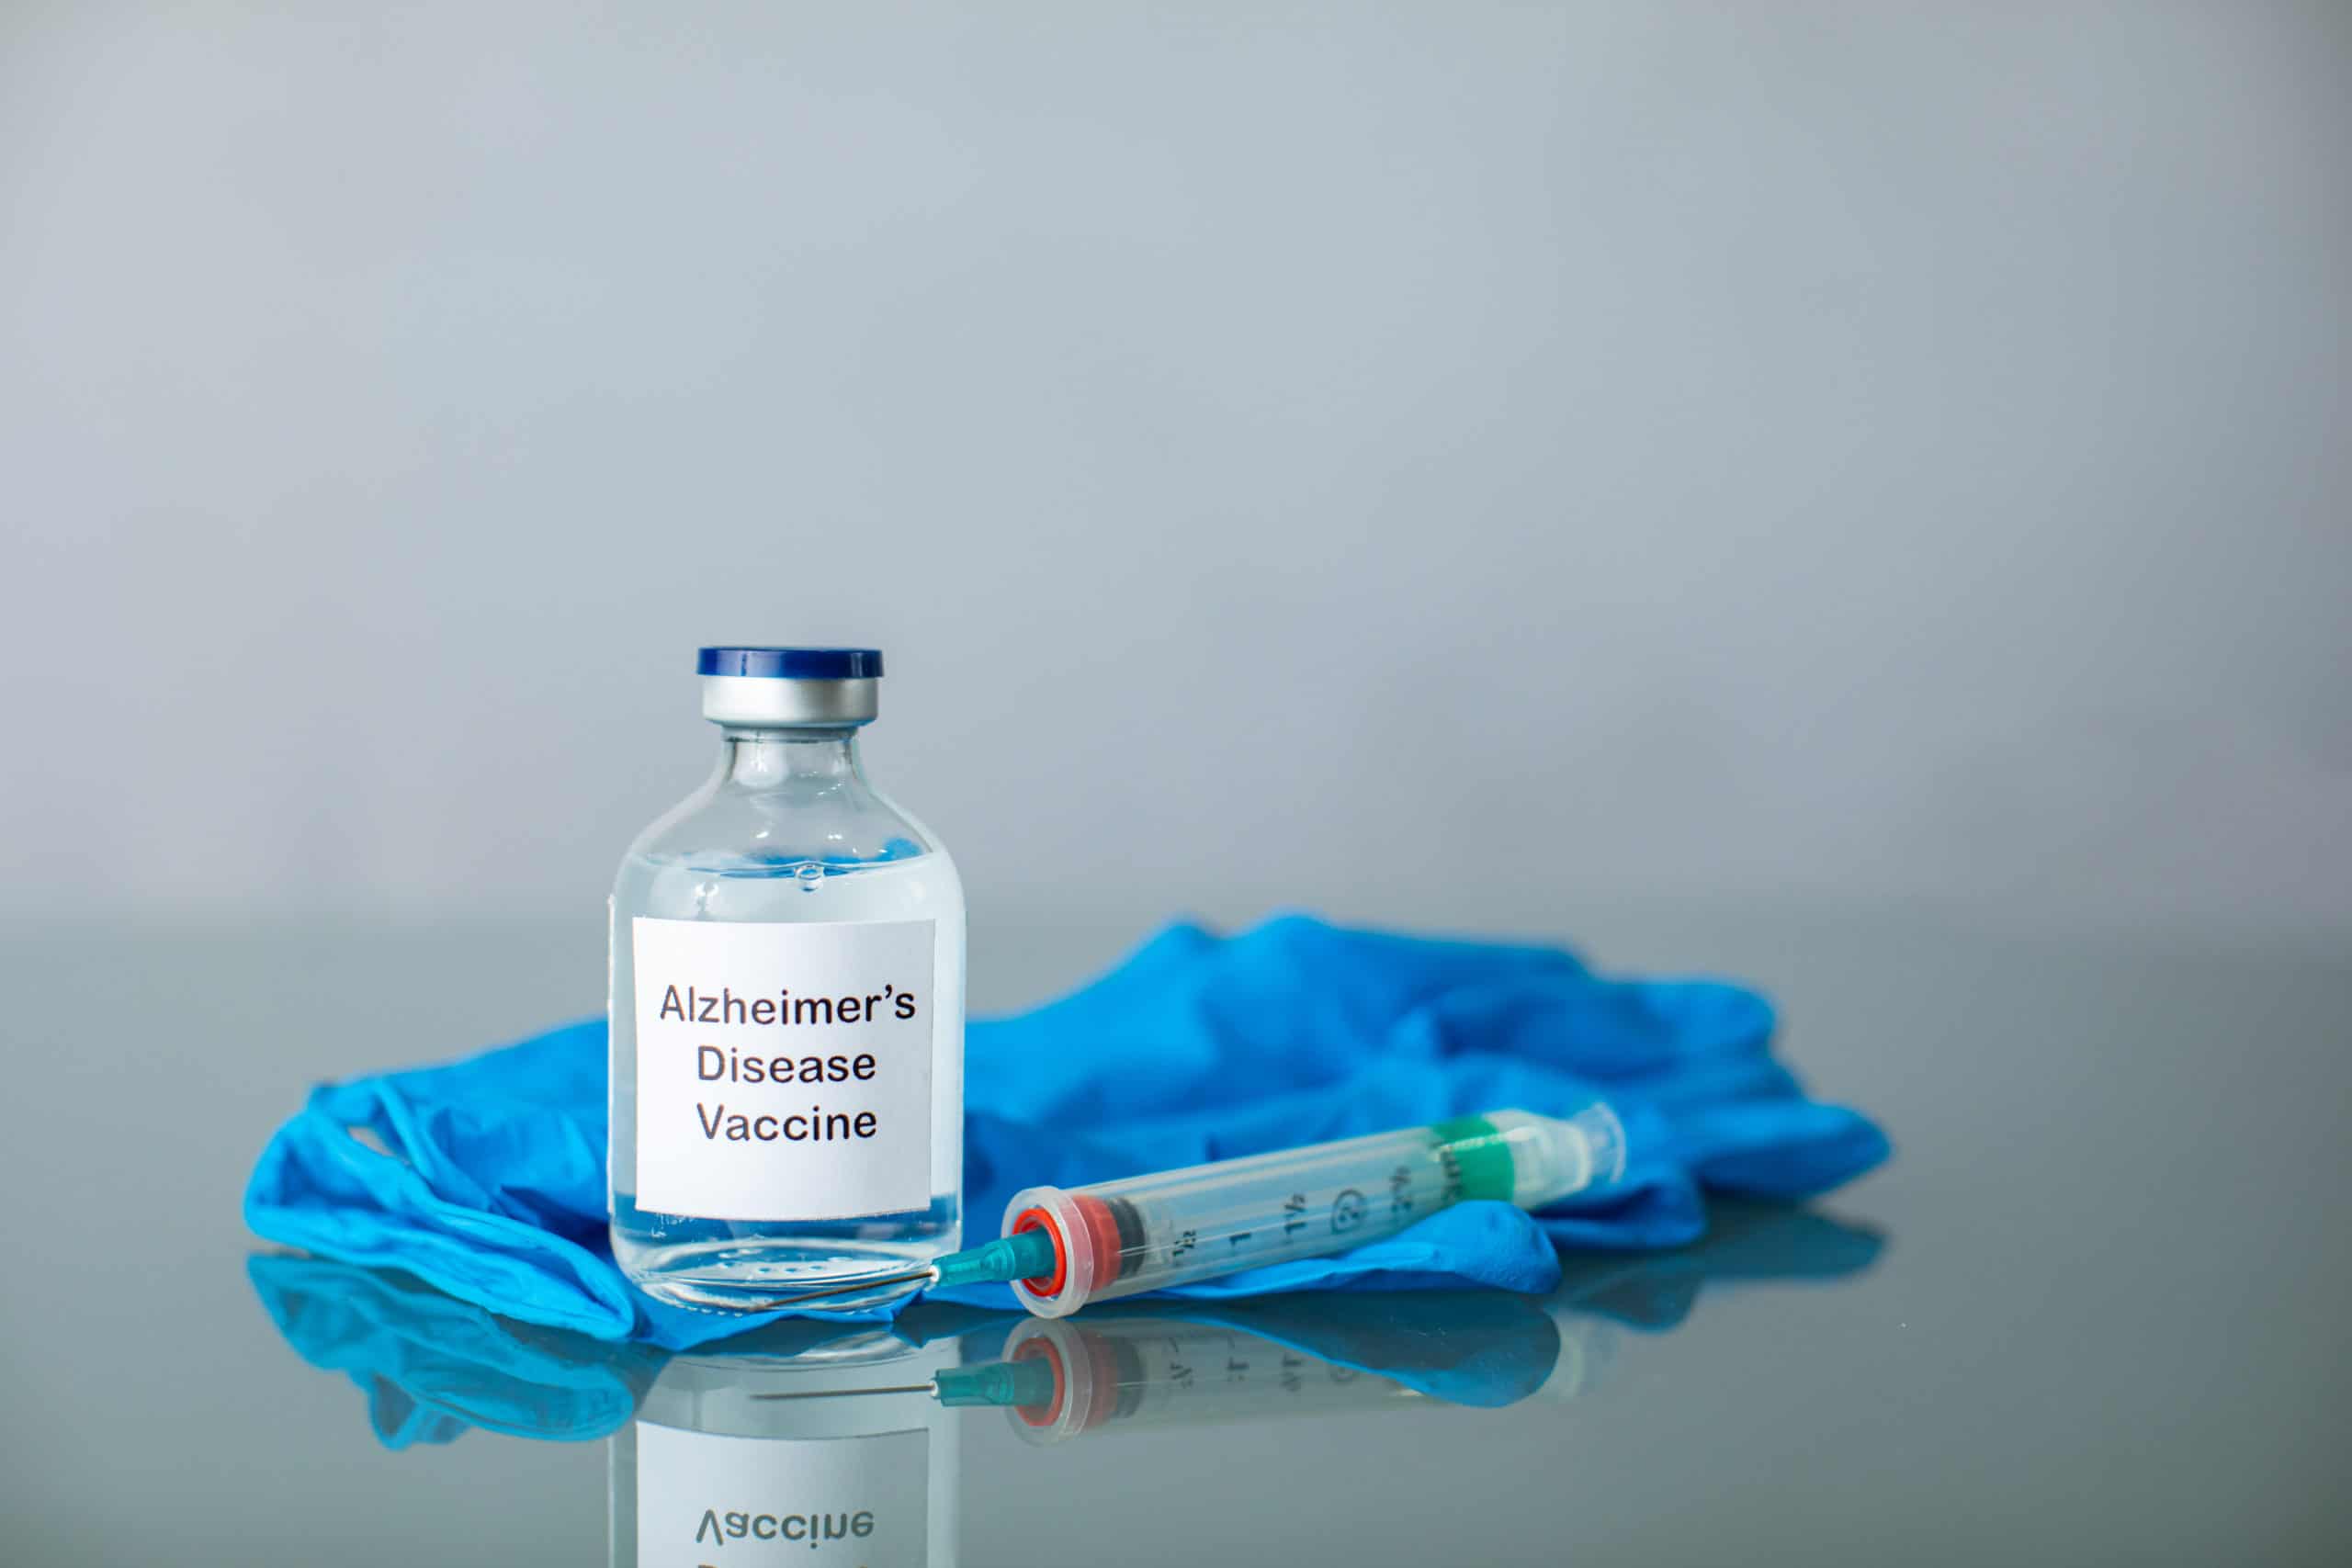 Alzheimer's Disease Vaccine